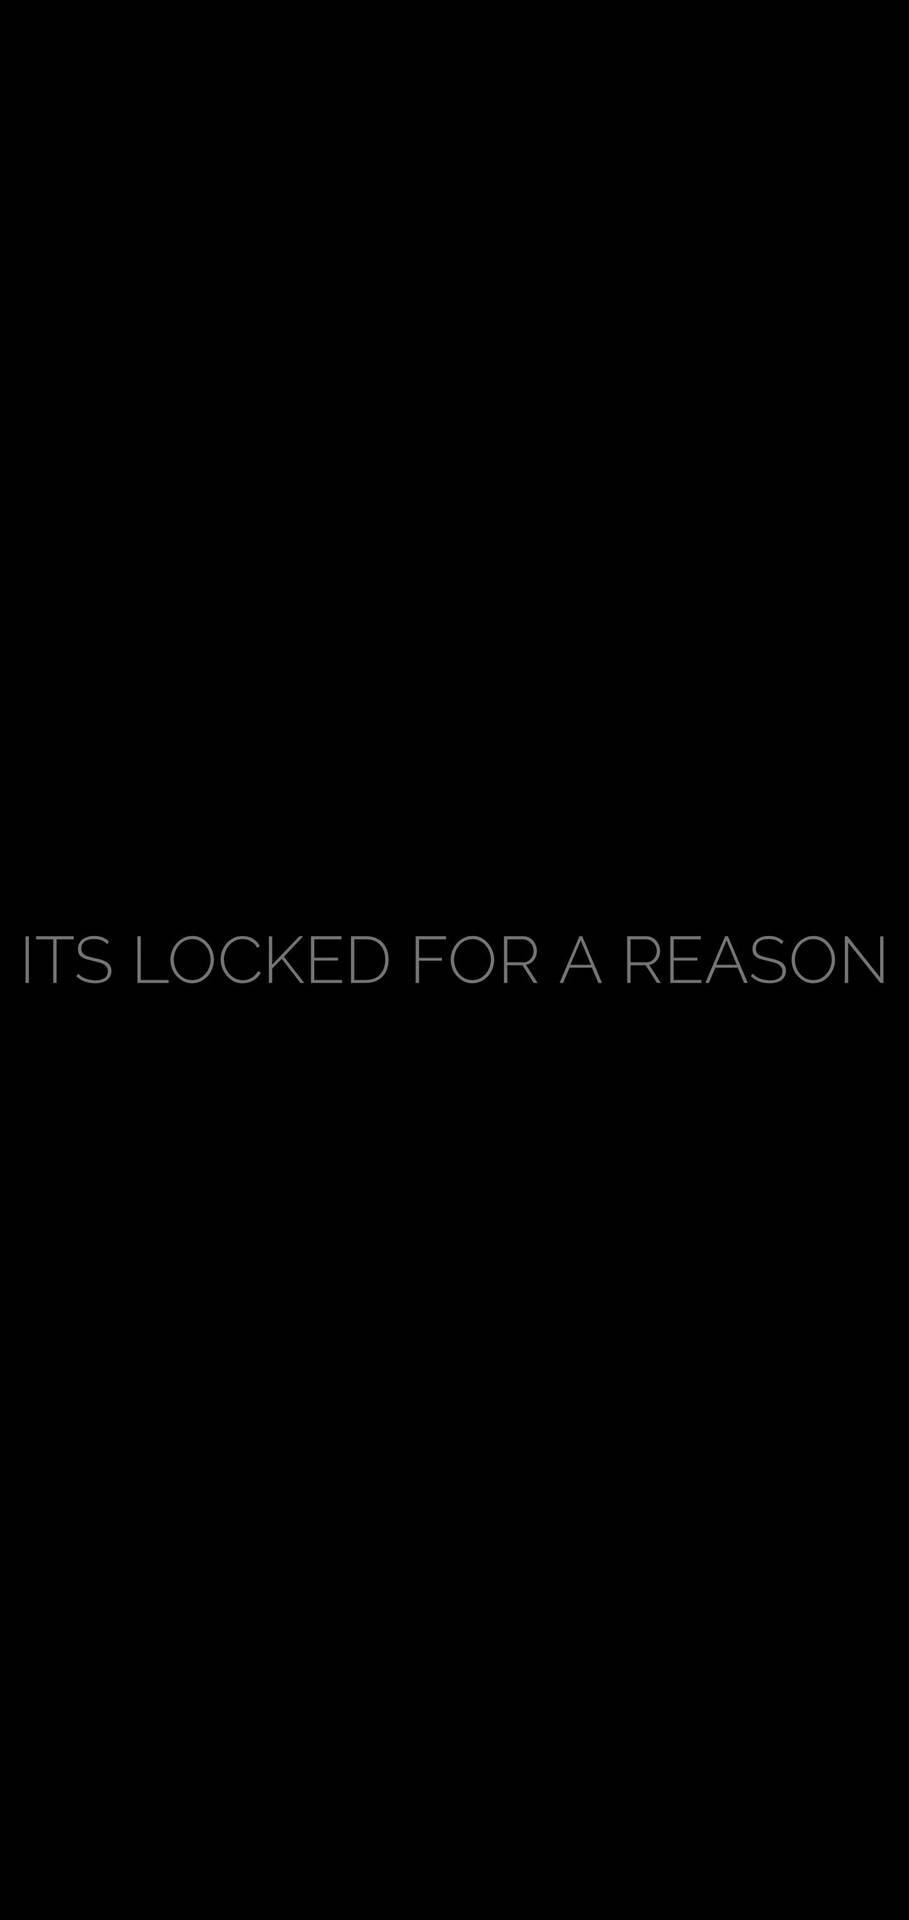 It’s Locked For A Reason Plain Wallpaper